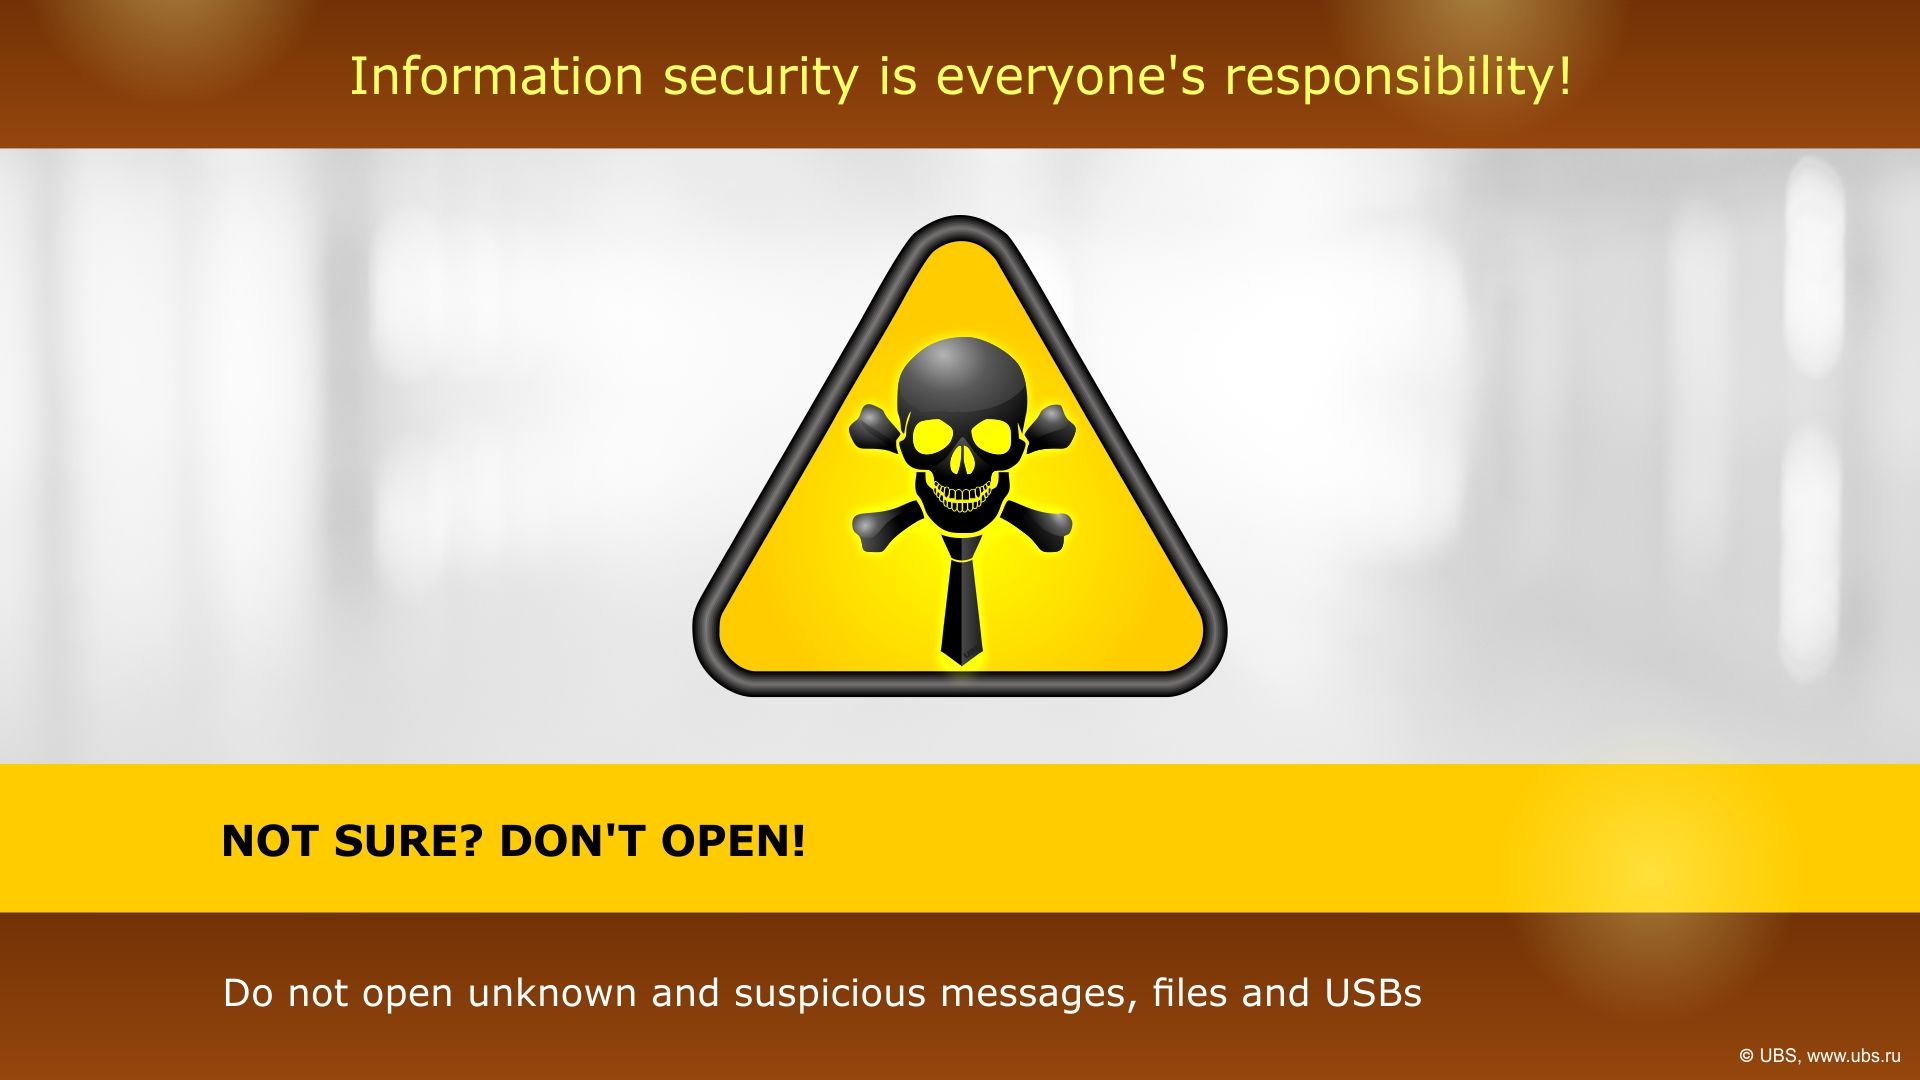 UBS. Smart Cybersecurity Awareness